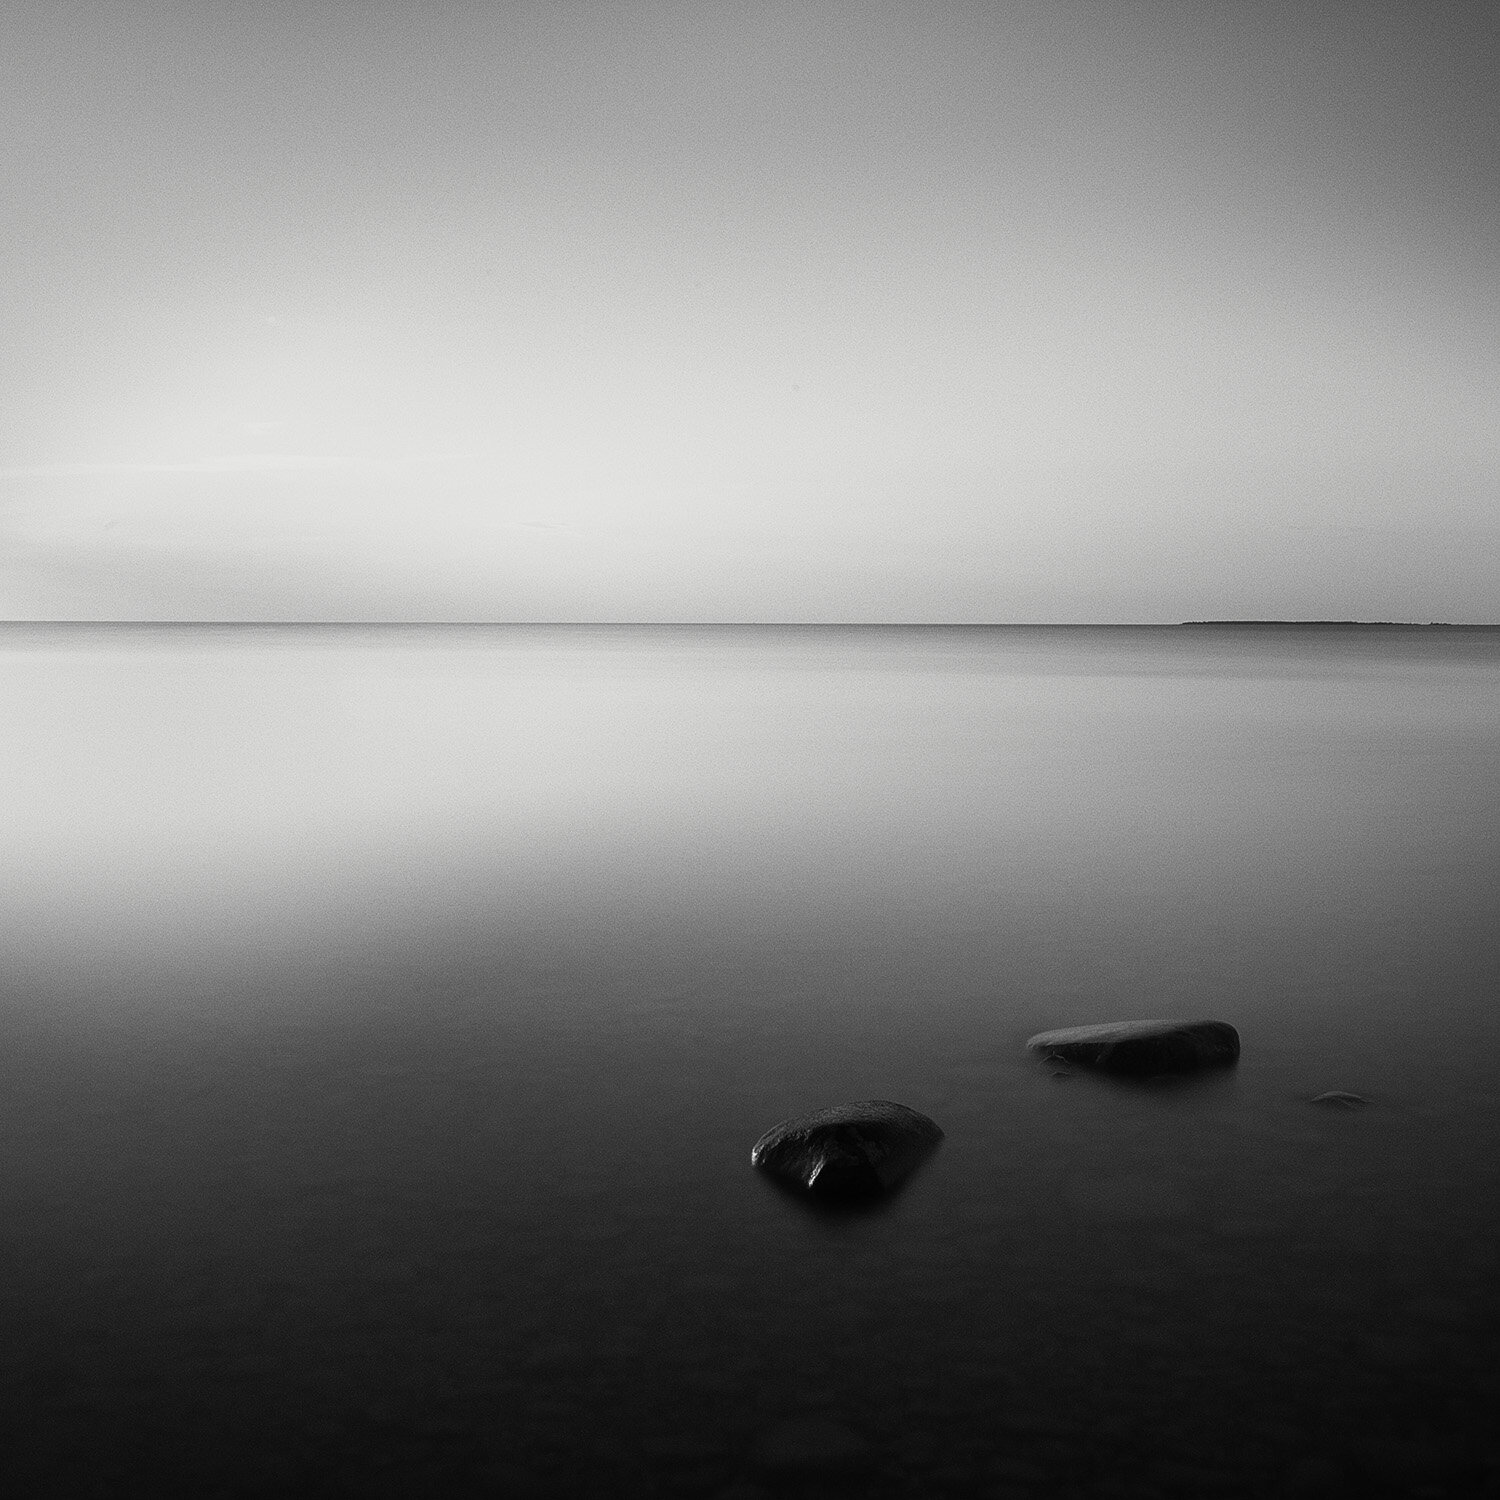 Two Rocks - Sturgeon Bay, Mi.